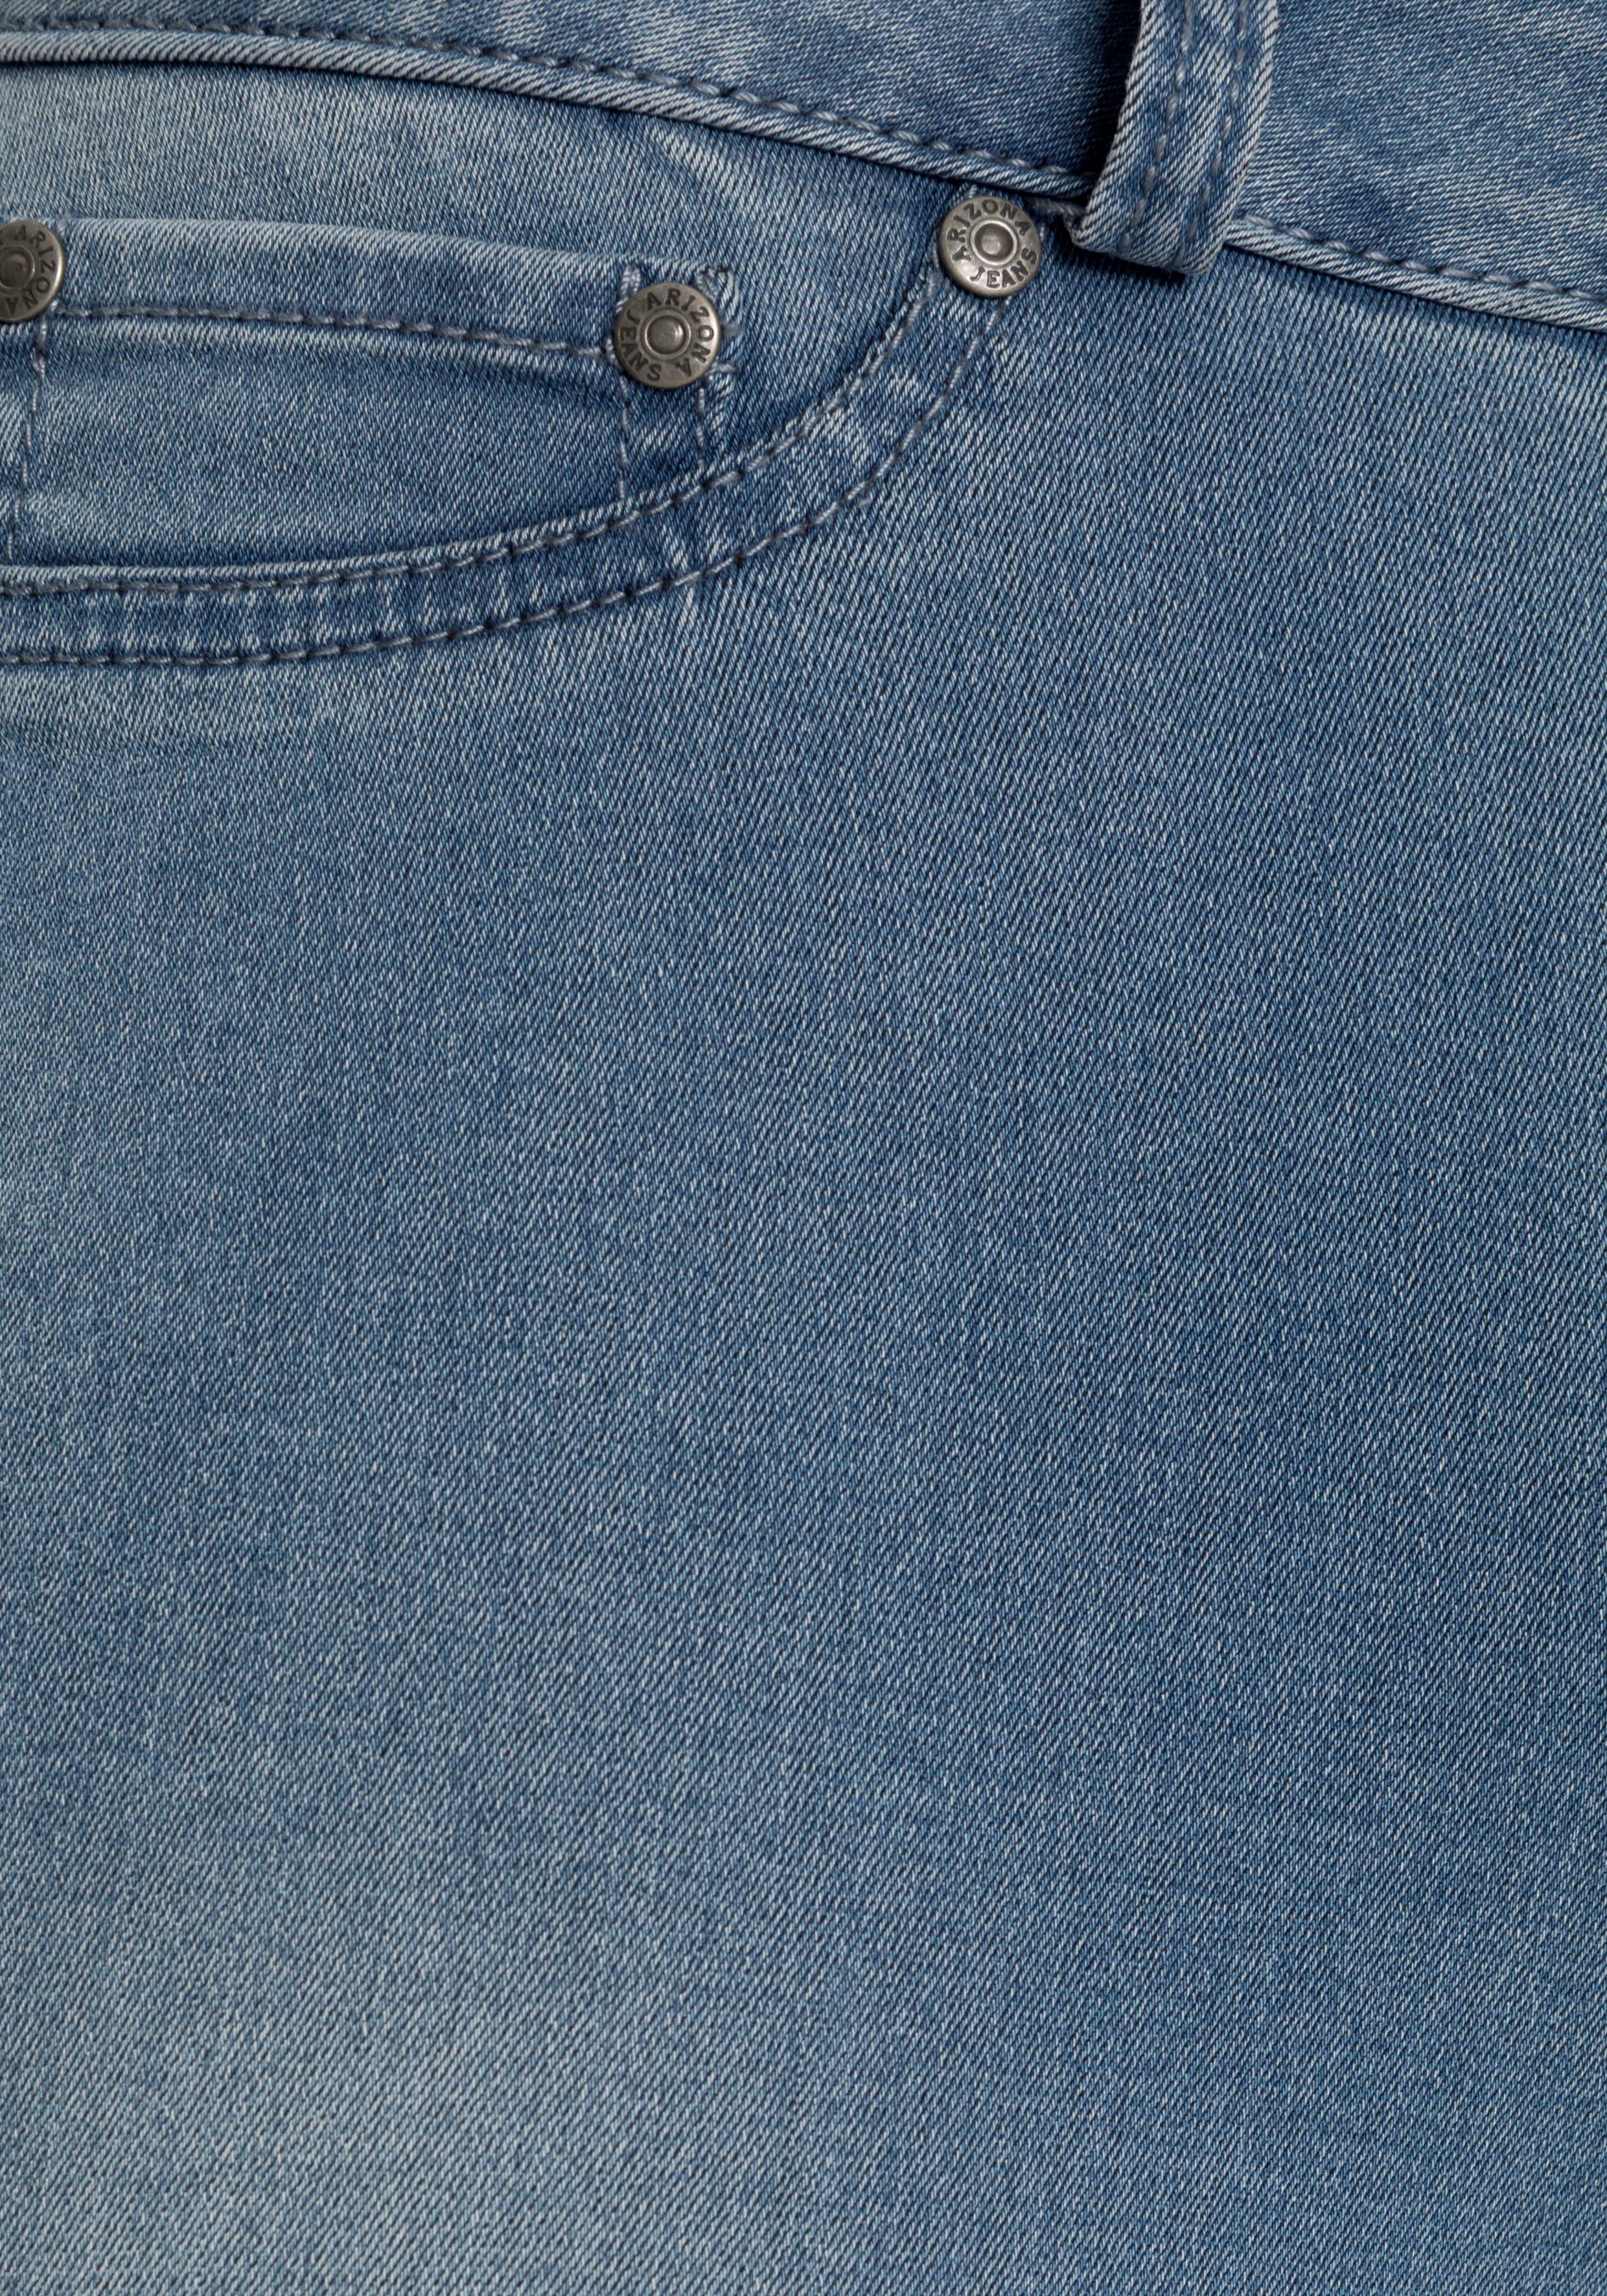 Arizona Skinny-fit-Jeans Ultra High Stretch Waist mit Shapingnähten blue-used